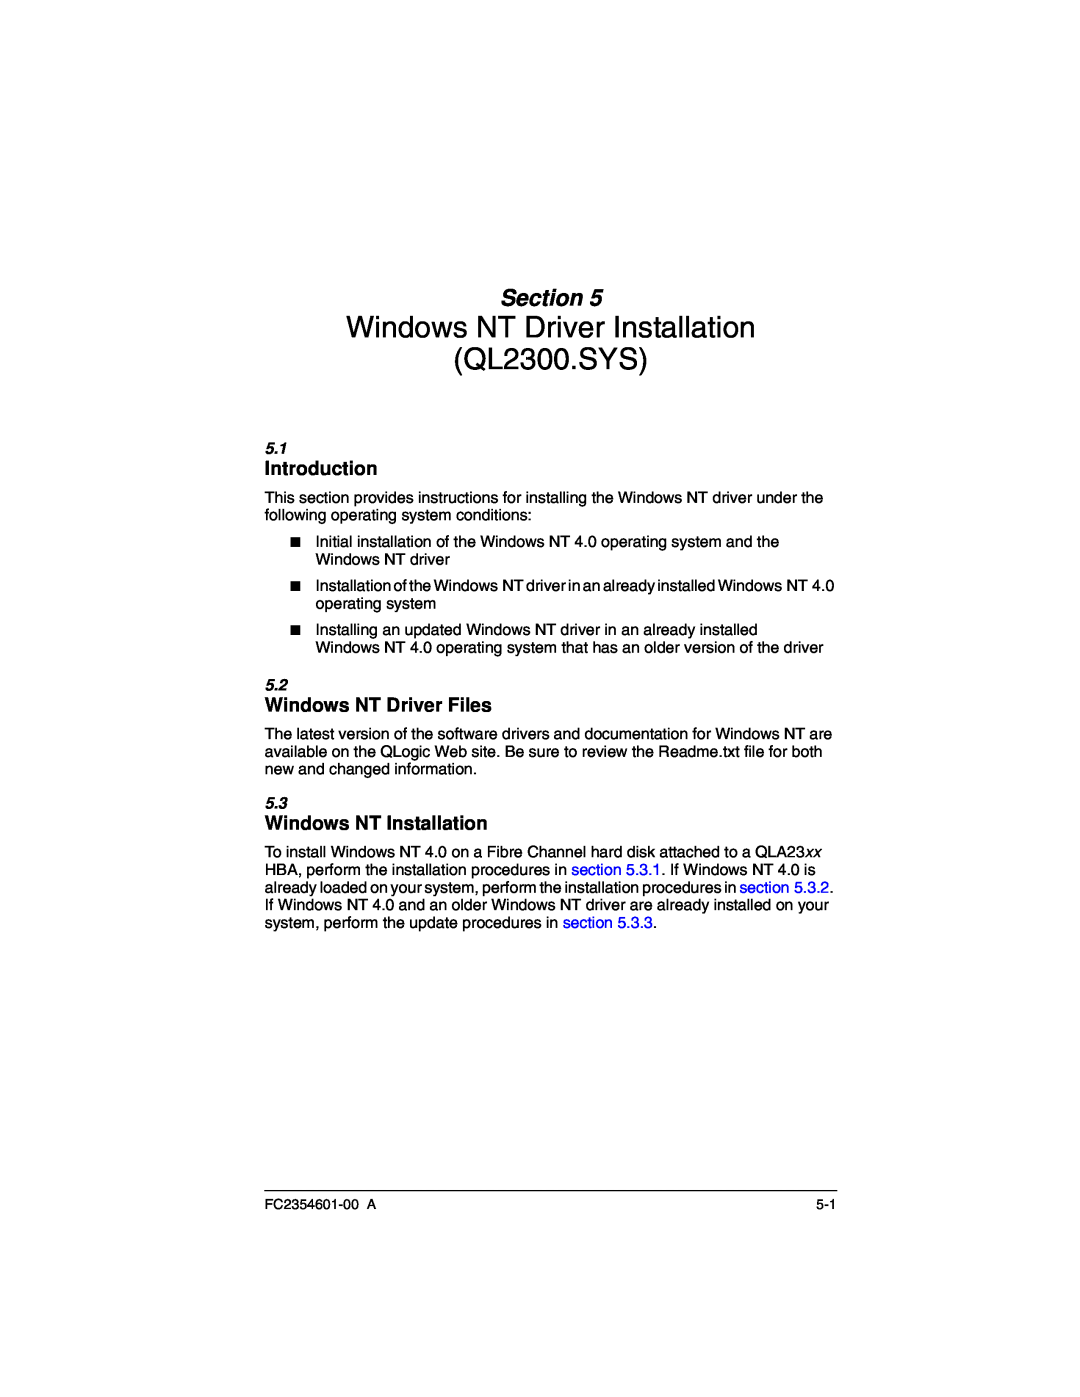 Q-Logic manual Windows NT Driver Installation QL2300.SYS, Windows NT Driver Files, Windows NT Installation, Section 